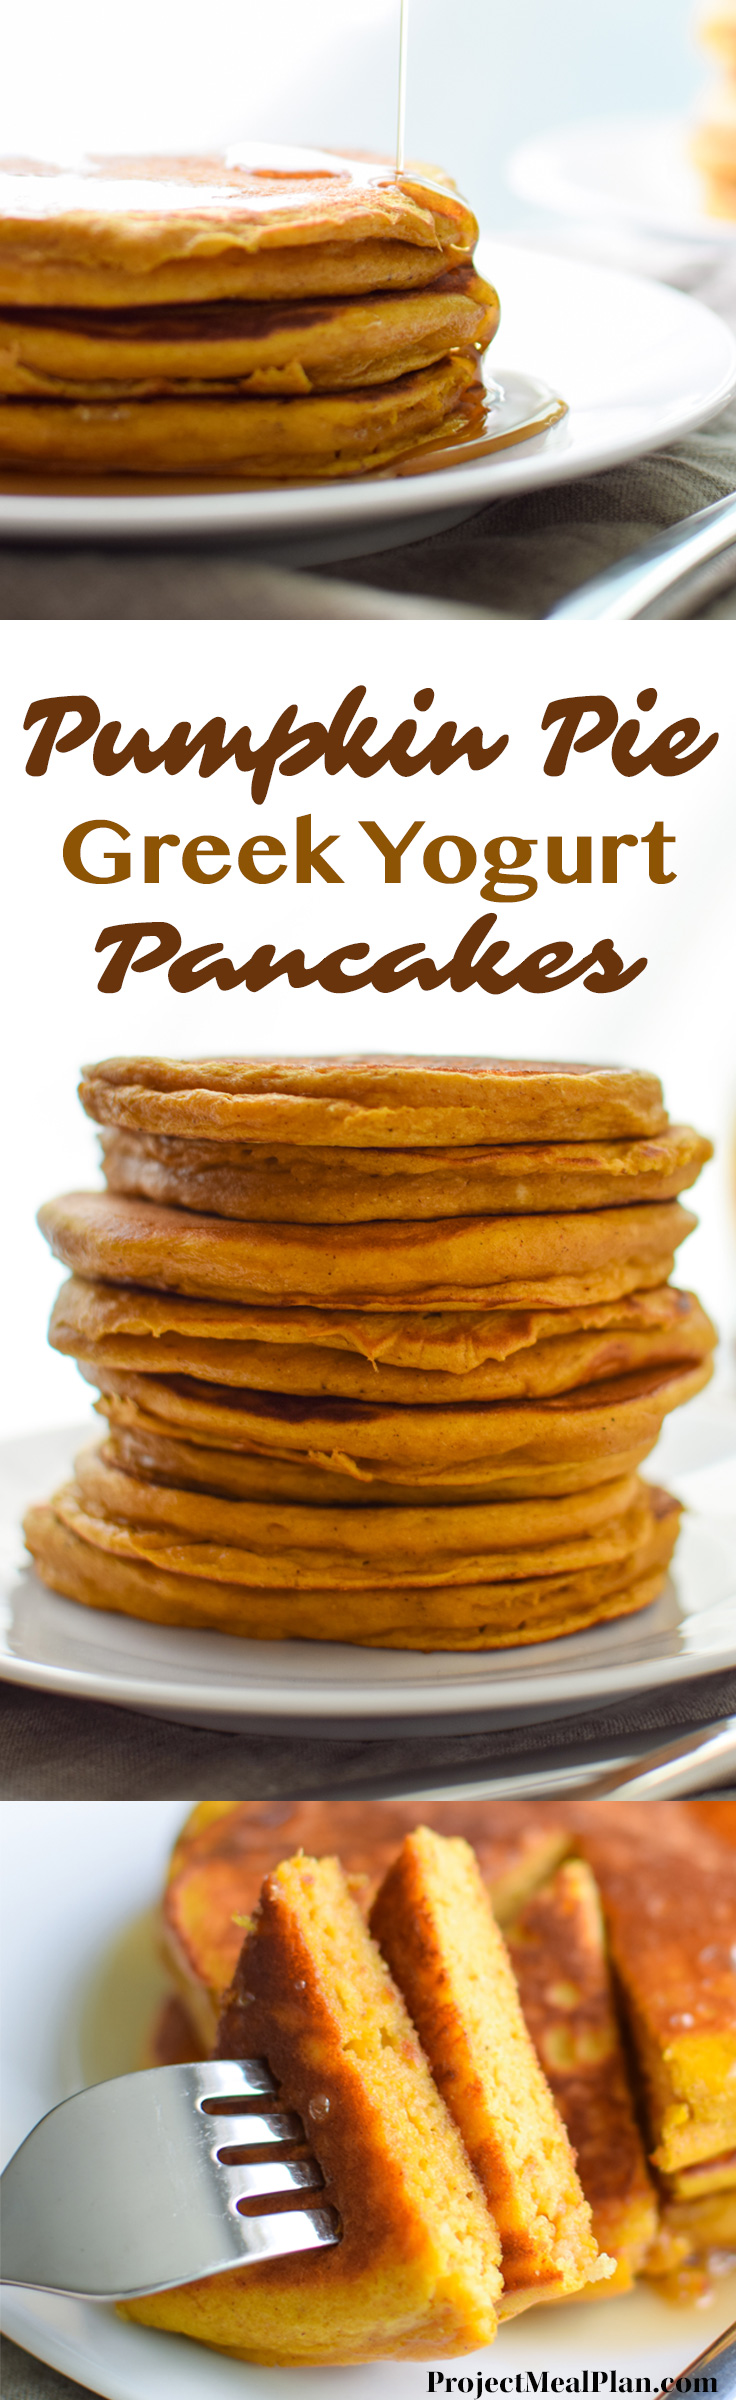 Pumpkin Pie Greek Yogurt Pancakes - Moist and delicious fall breakfast treat! Make-ahead and fridge friendly! - ProjectMealPlan.com